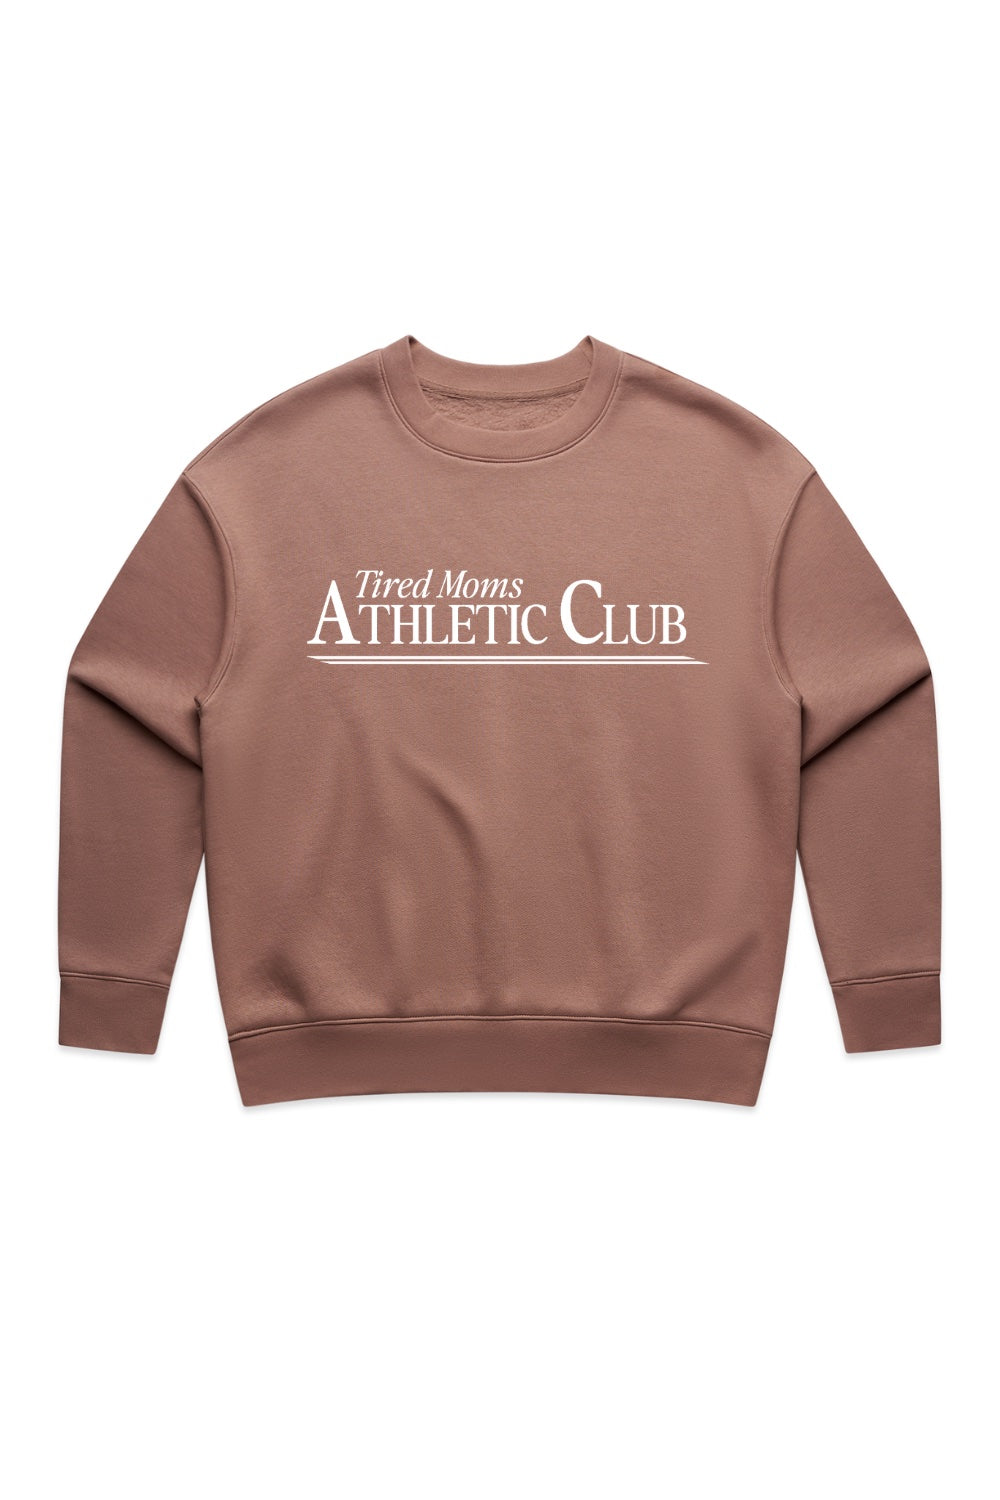 Tired Moms Athletic Club Luxe Sweatshirt